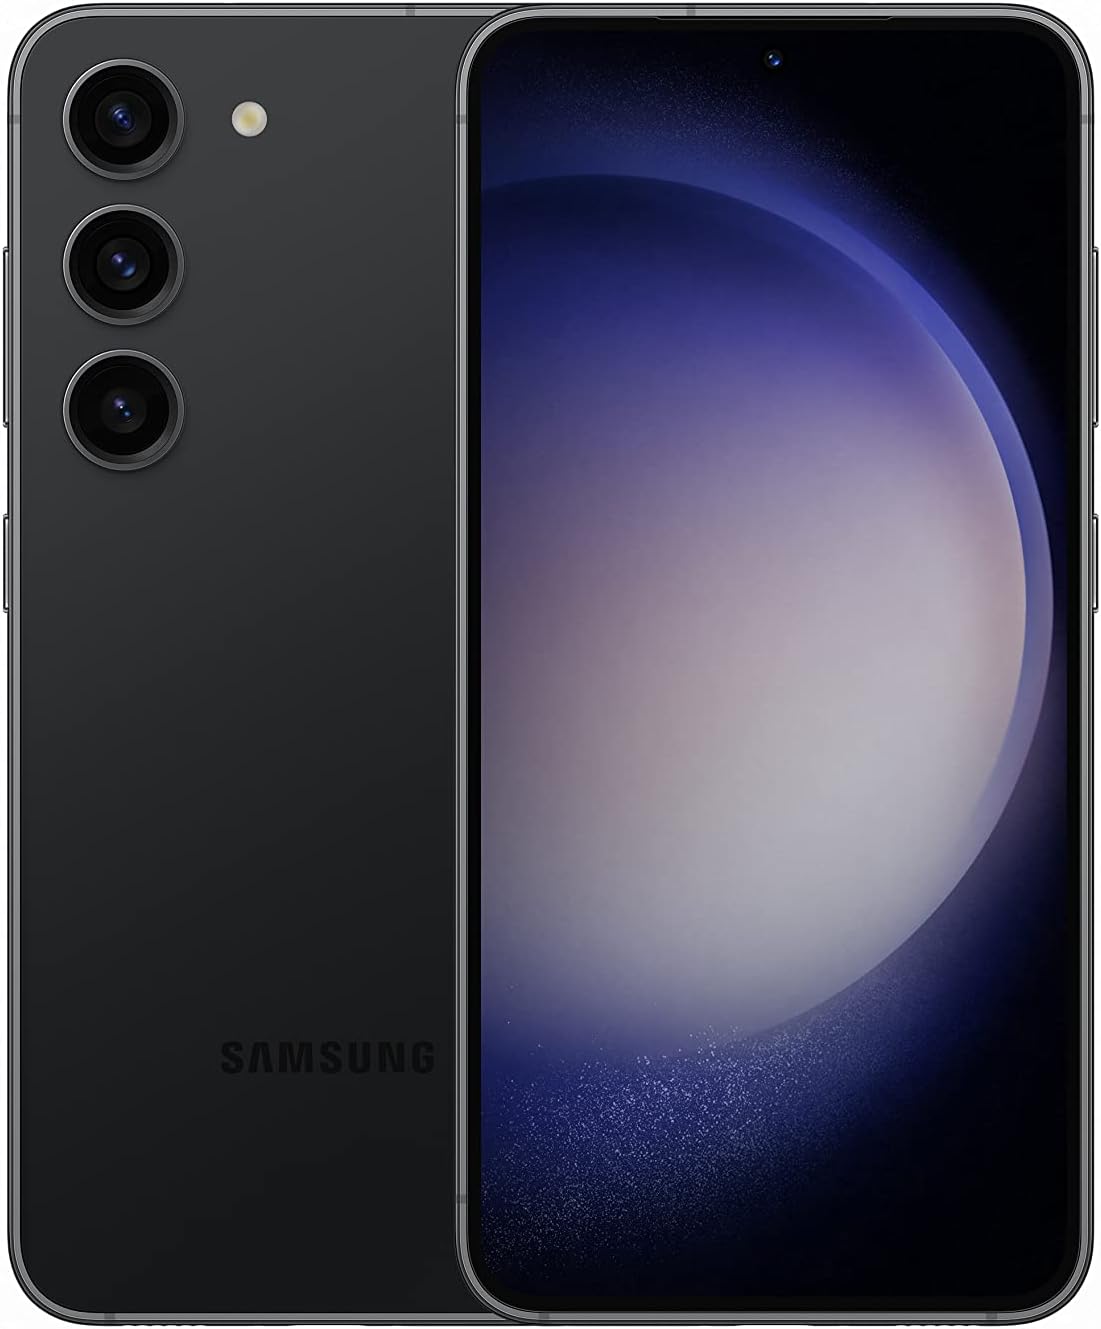  SAMSUNG Galaxy A13 (SM-A135F/DS) Dual SIM,128 GB 4GB RAM,  Factory Unlocked GSM, International Version - No Warranty - (Blue) : Cell  Phones & Accessories